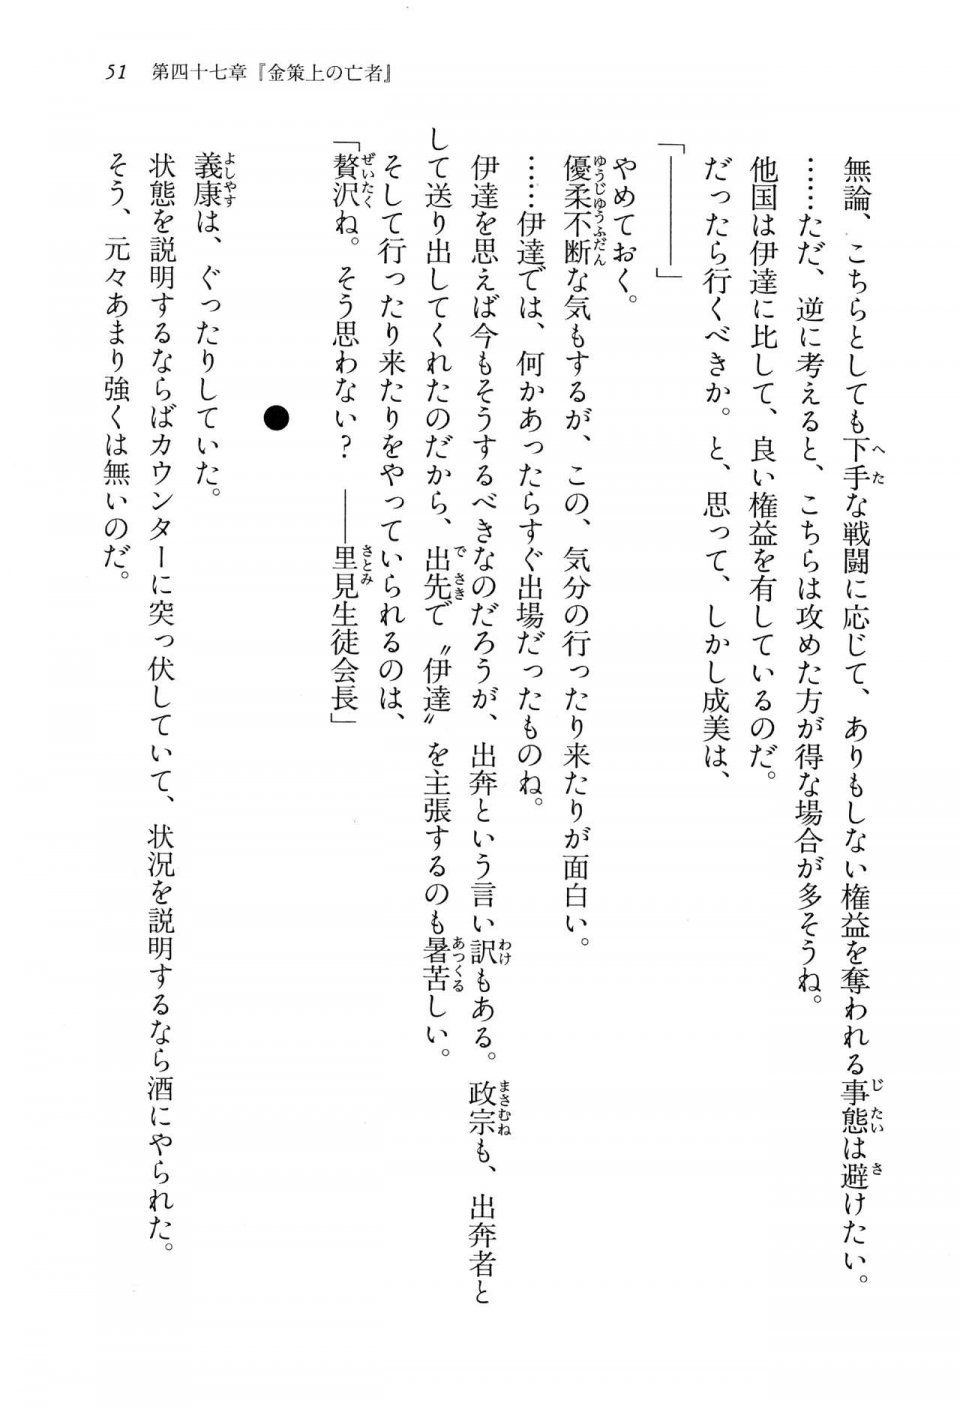 Kyoukai Senjou no Horizon LN Vol 15(6C) Part 1 - Photo #51